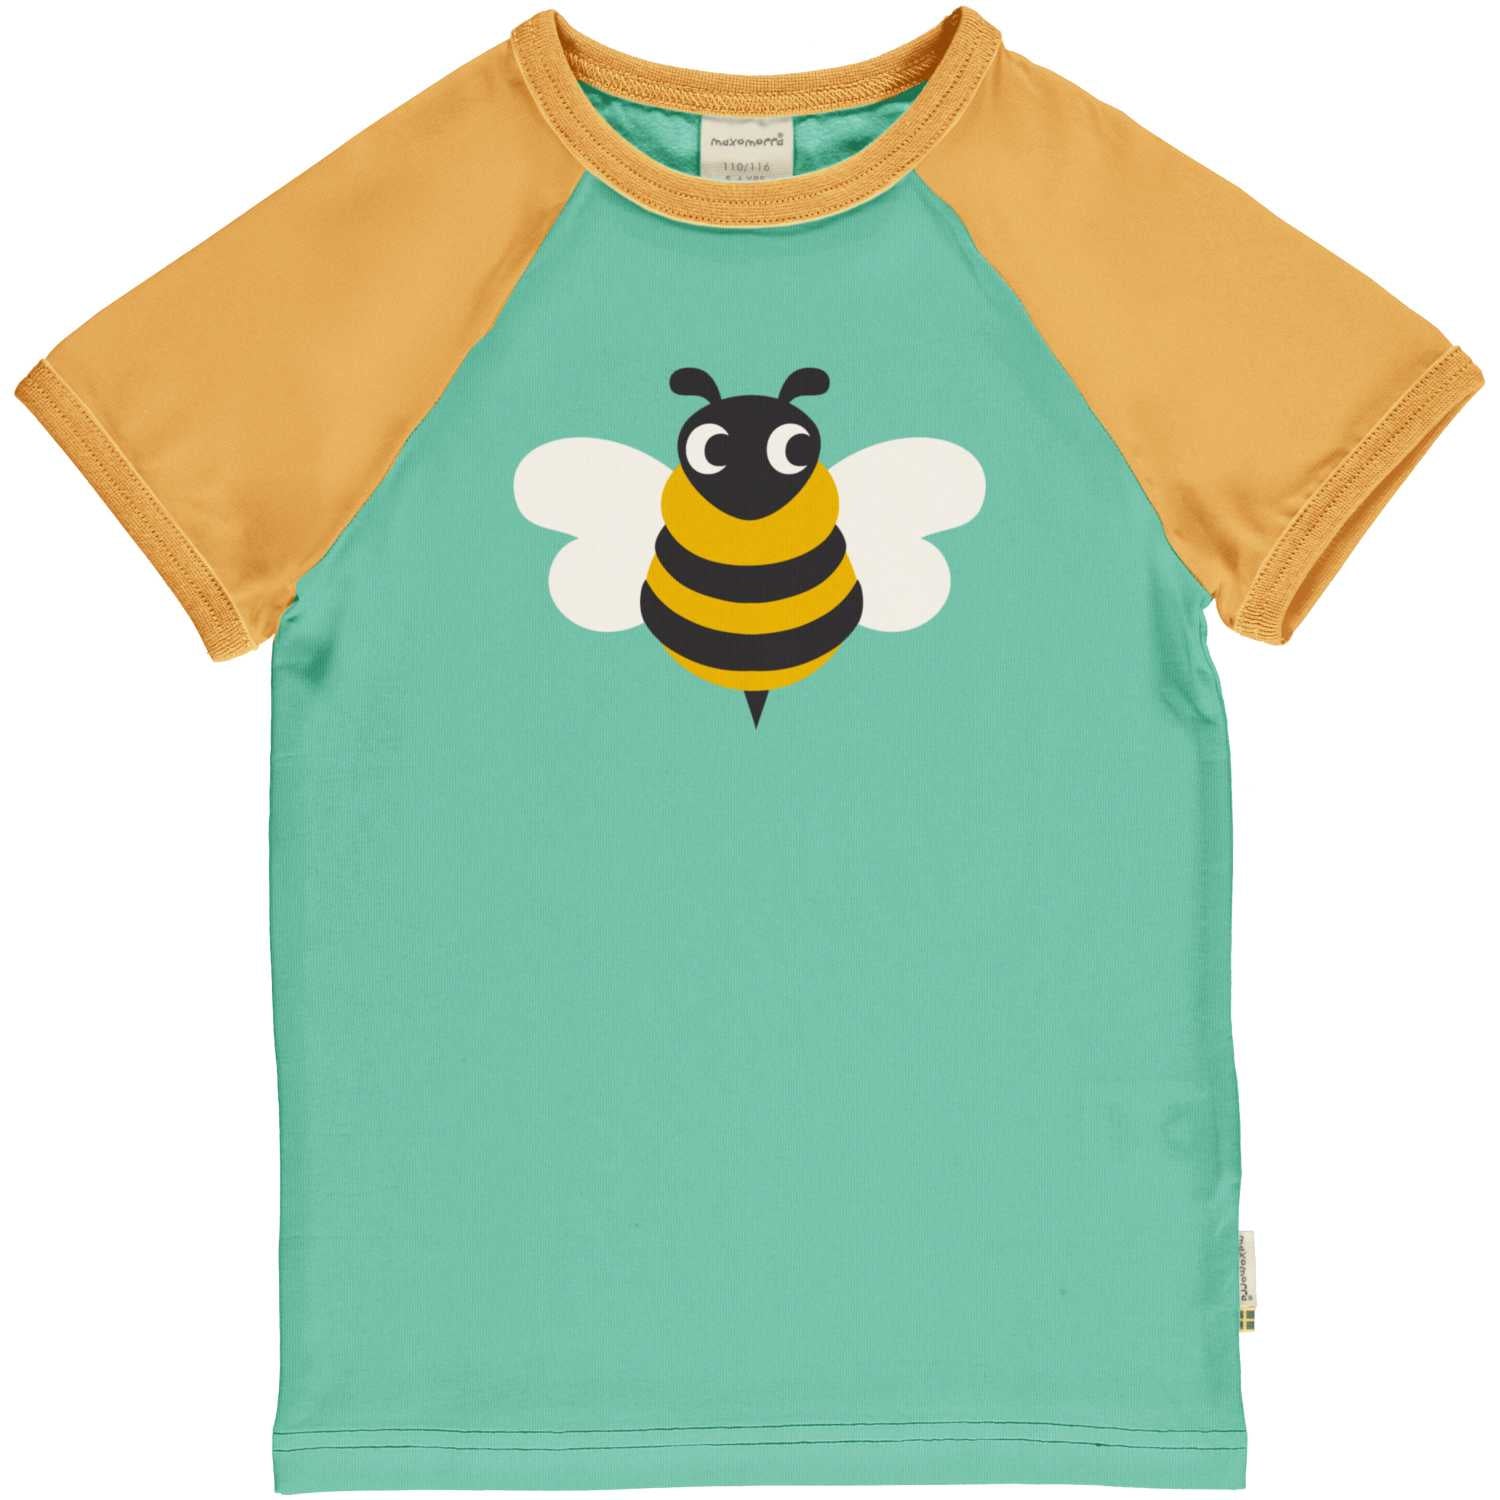 Maxomorra Bee Raglan T-Shirt Ss24 Clothing 3-4YRS / Green,5-6YRS / Green,7-8YRS / Green,1-2 YRS / Green